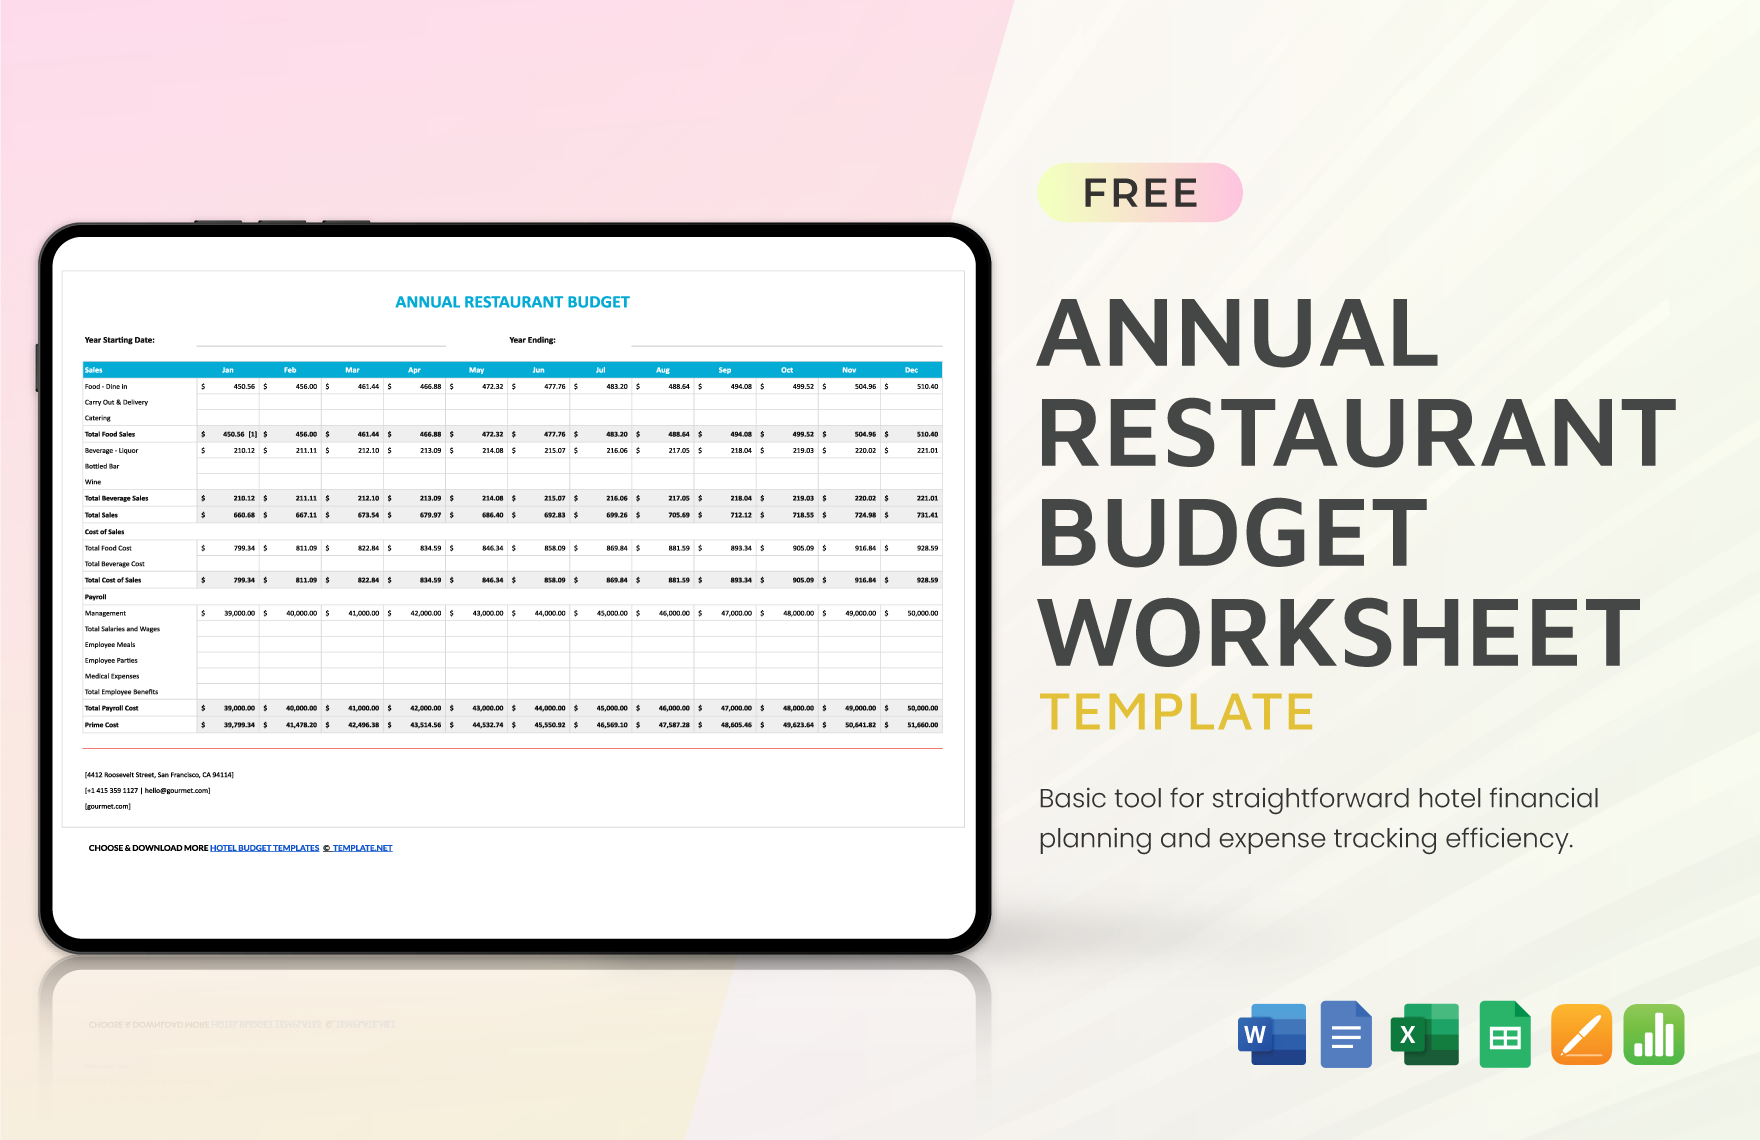 Annual Restaurant Budget Worksheet Template